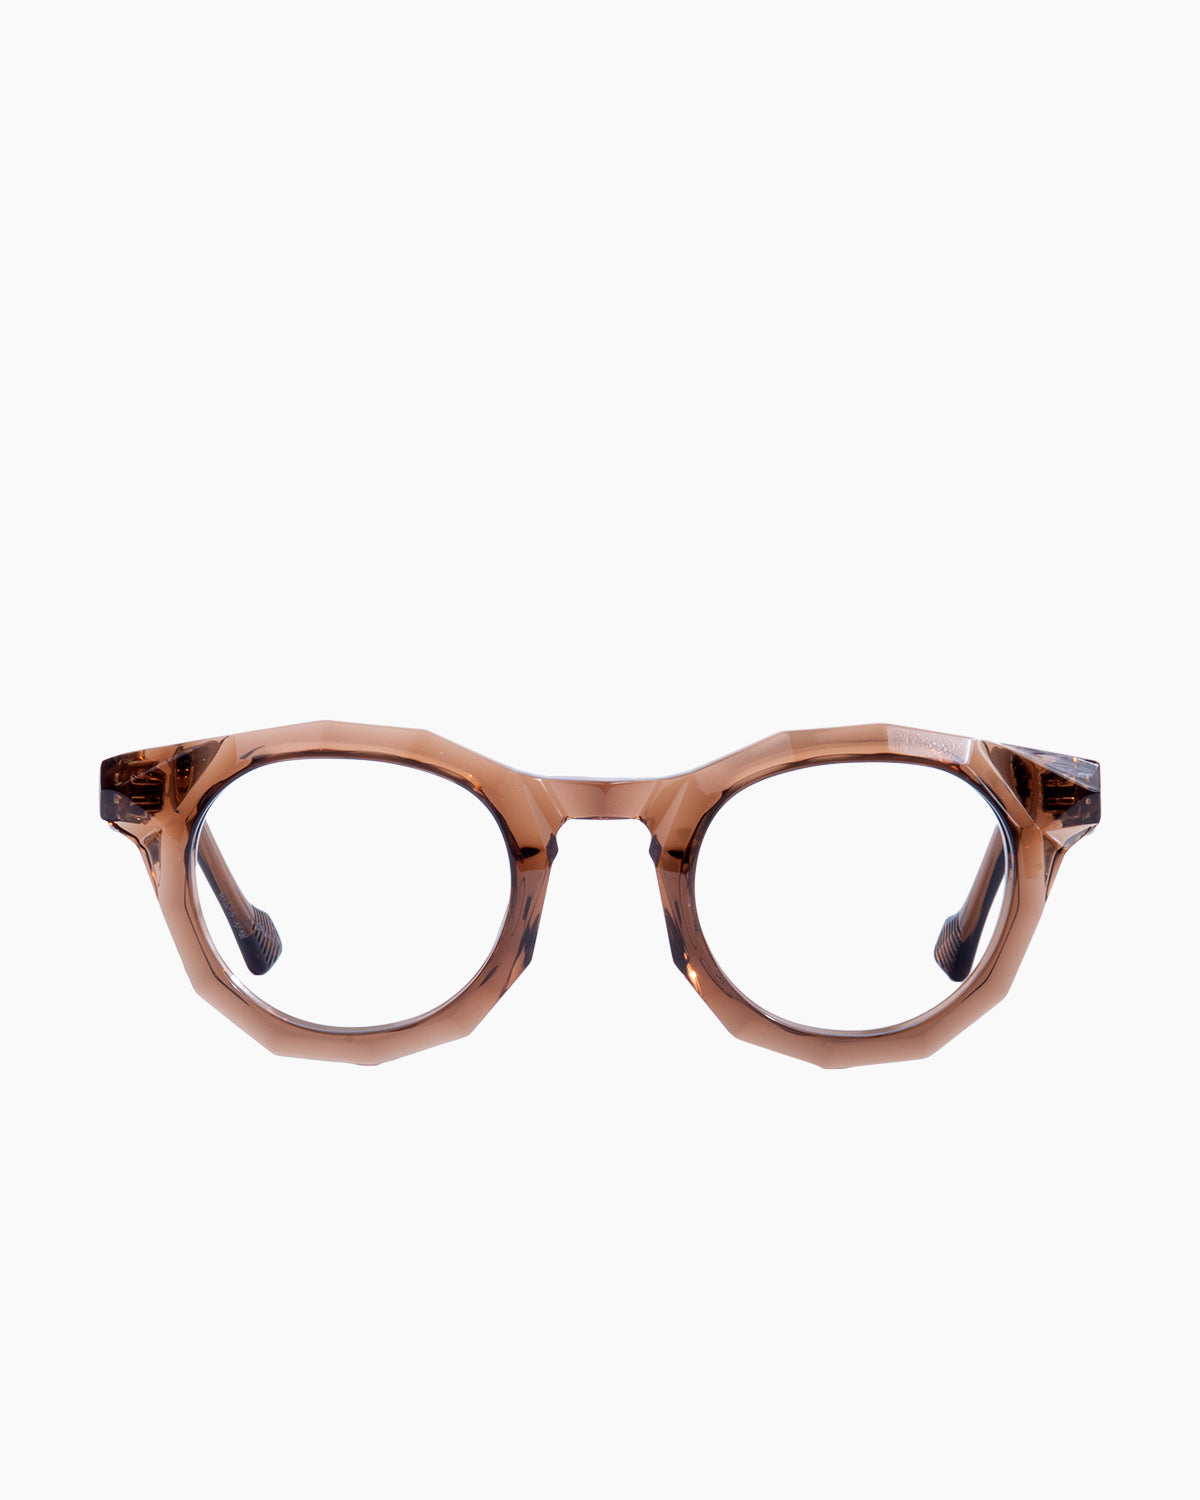 Yohji Yamamoto - Look010 - a002 | glasses bar:  Marie-Sophie Dion